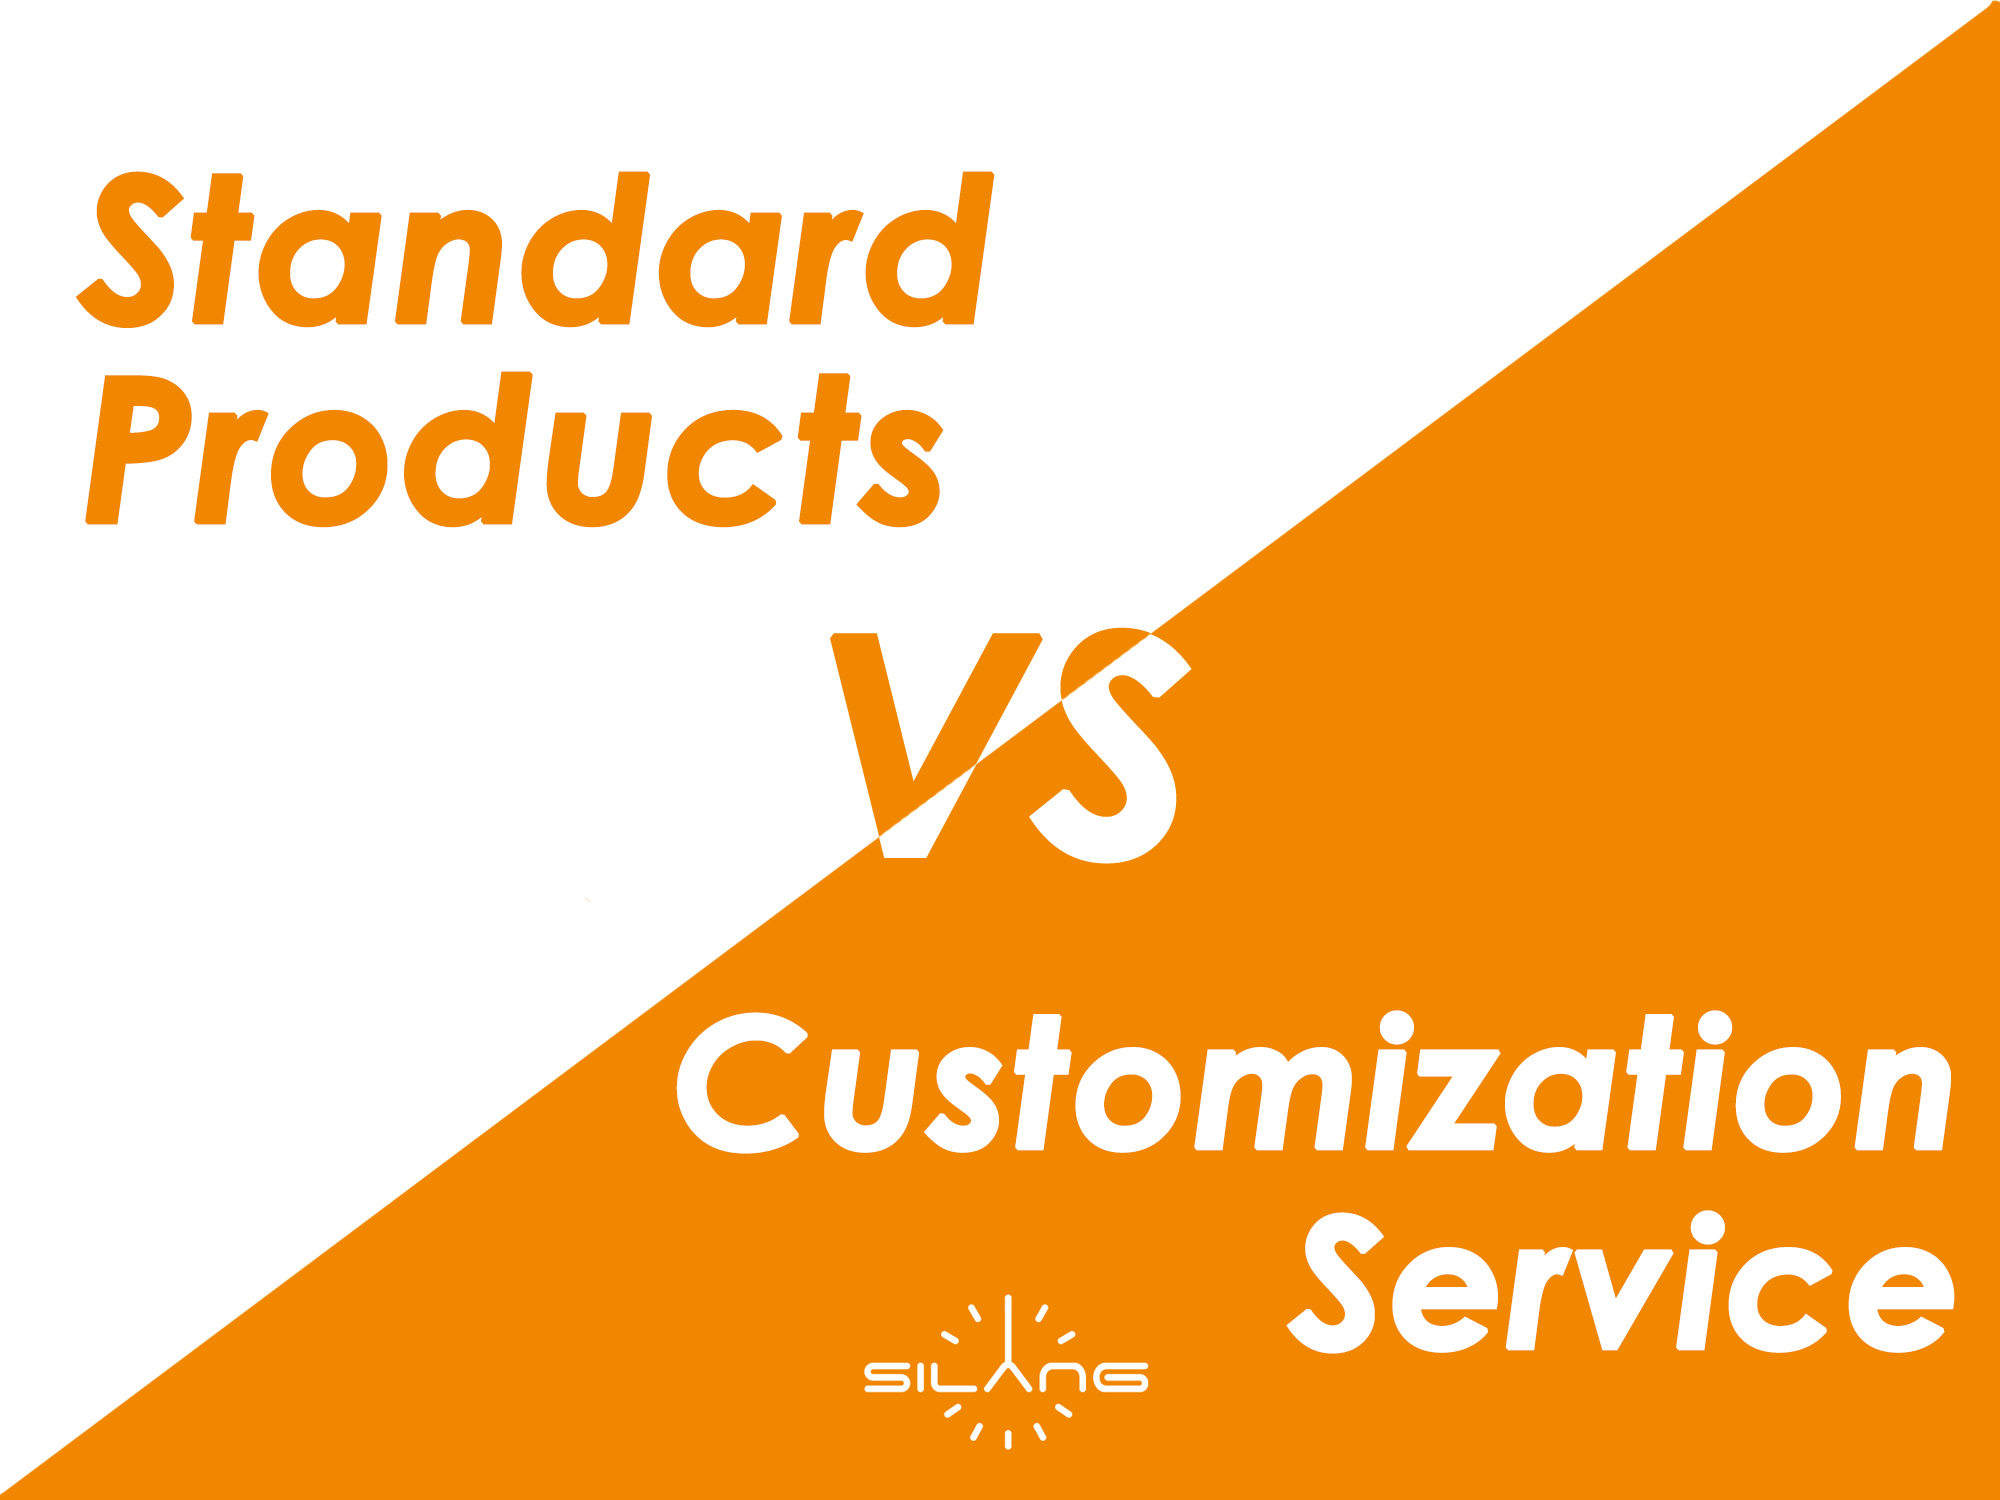 Standard Products & Customization Service